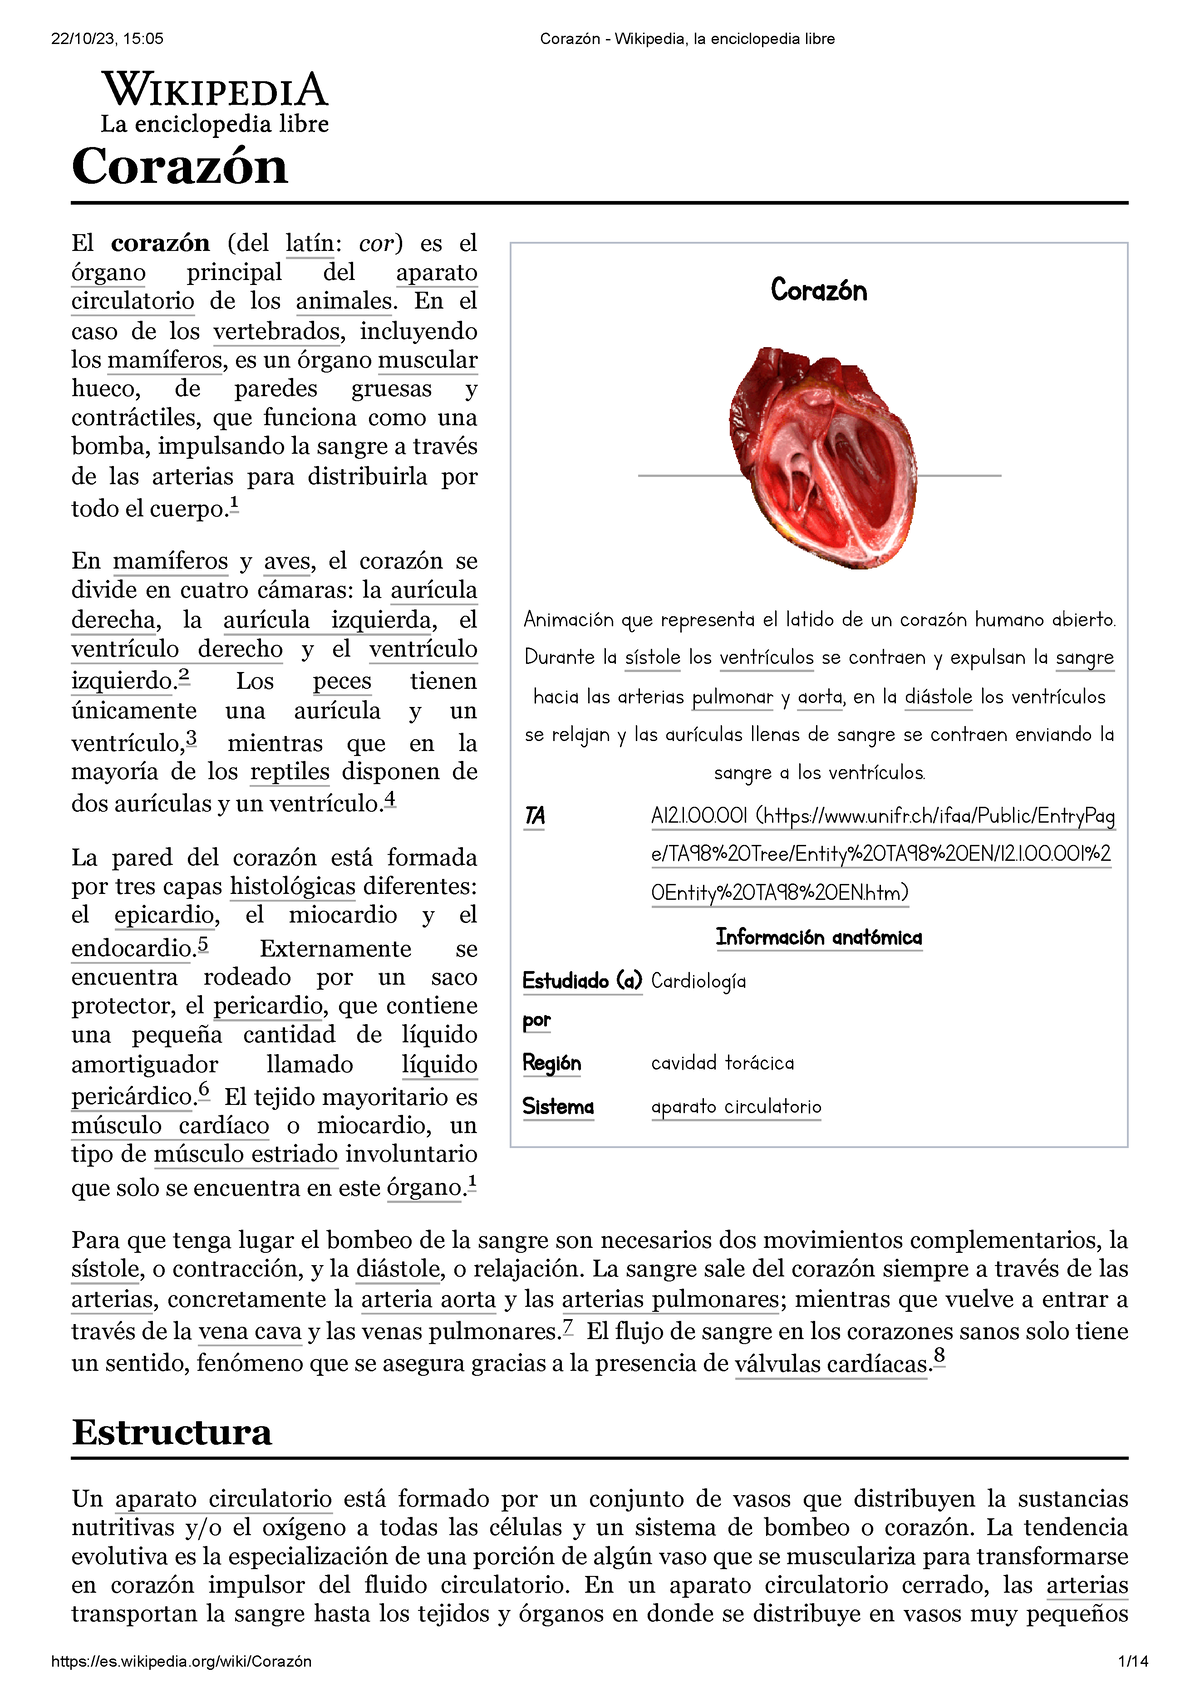 Aparato circulatorio - Wikipedia, la enciclopedia libre